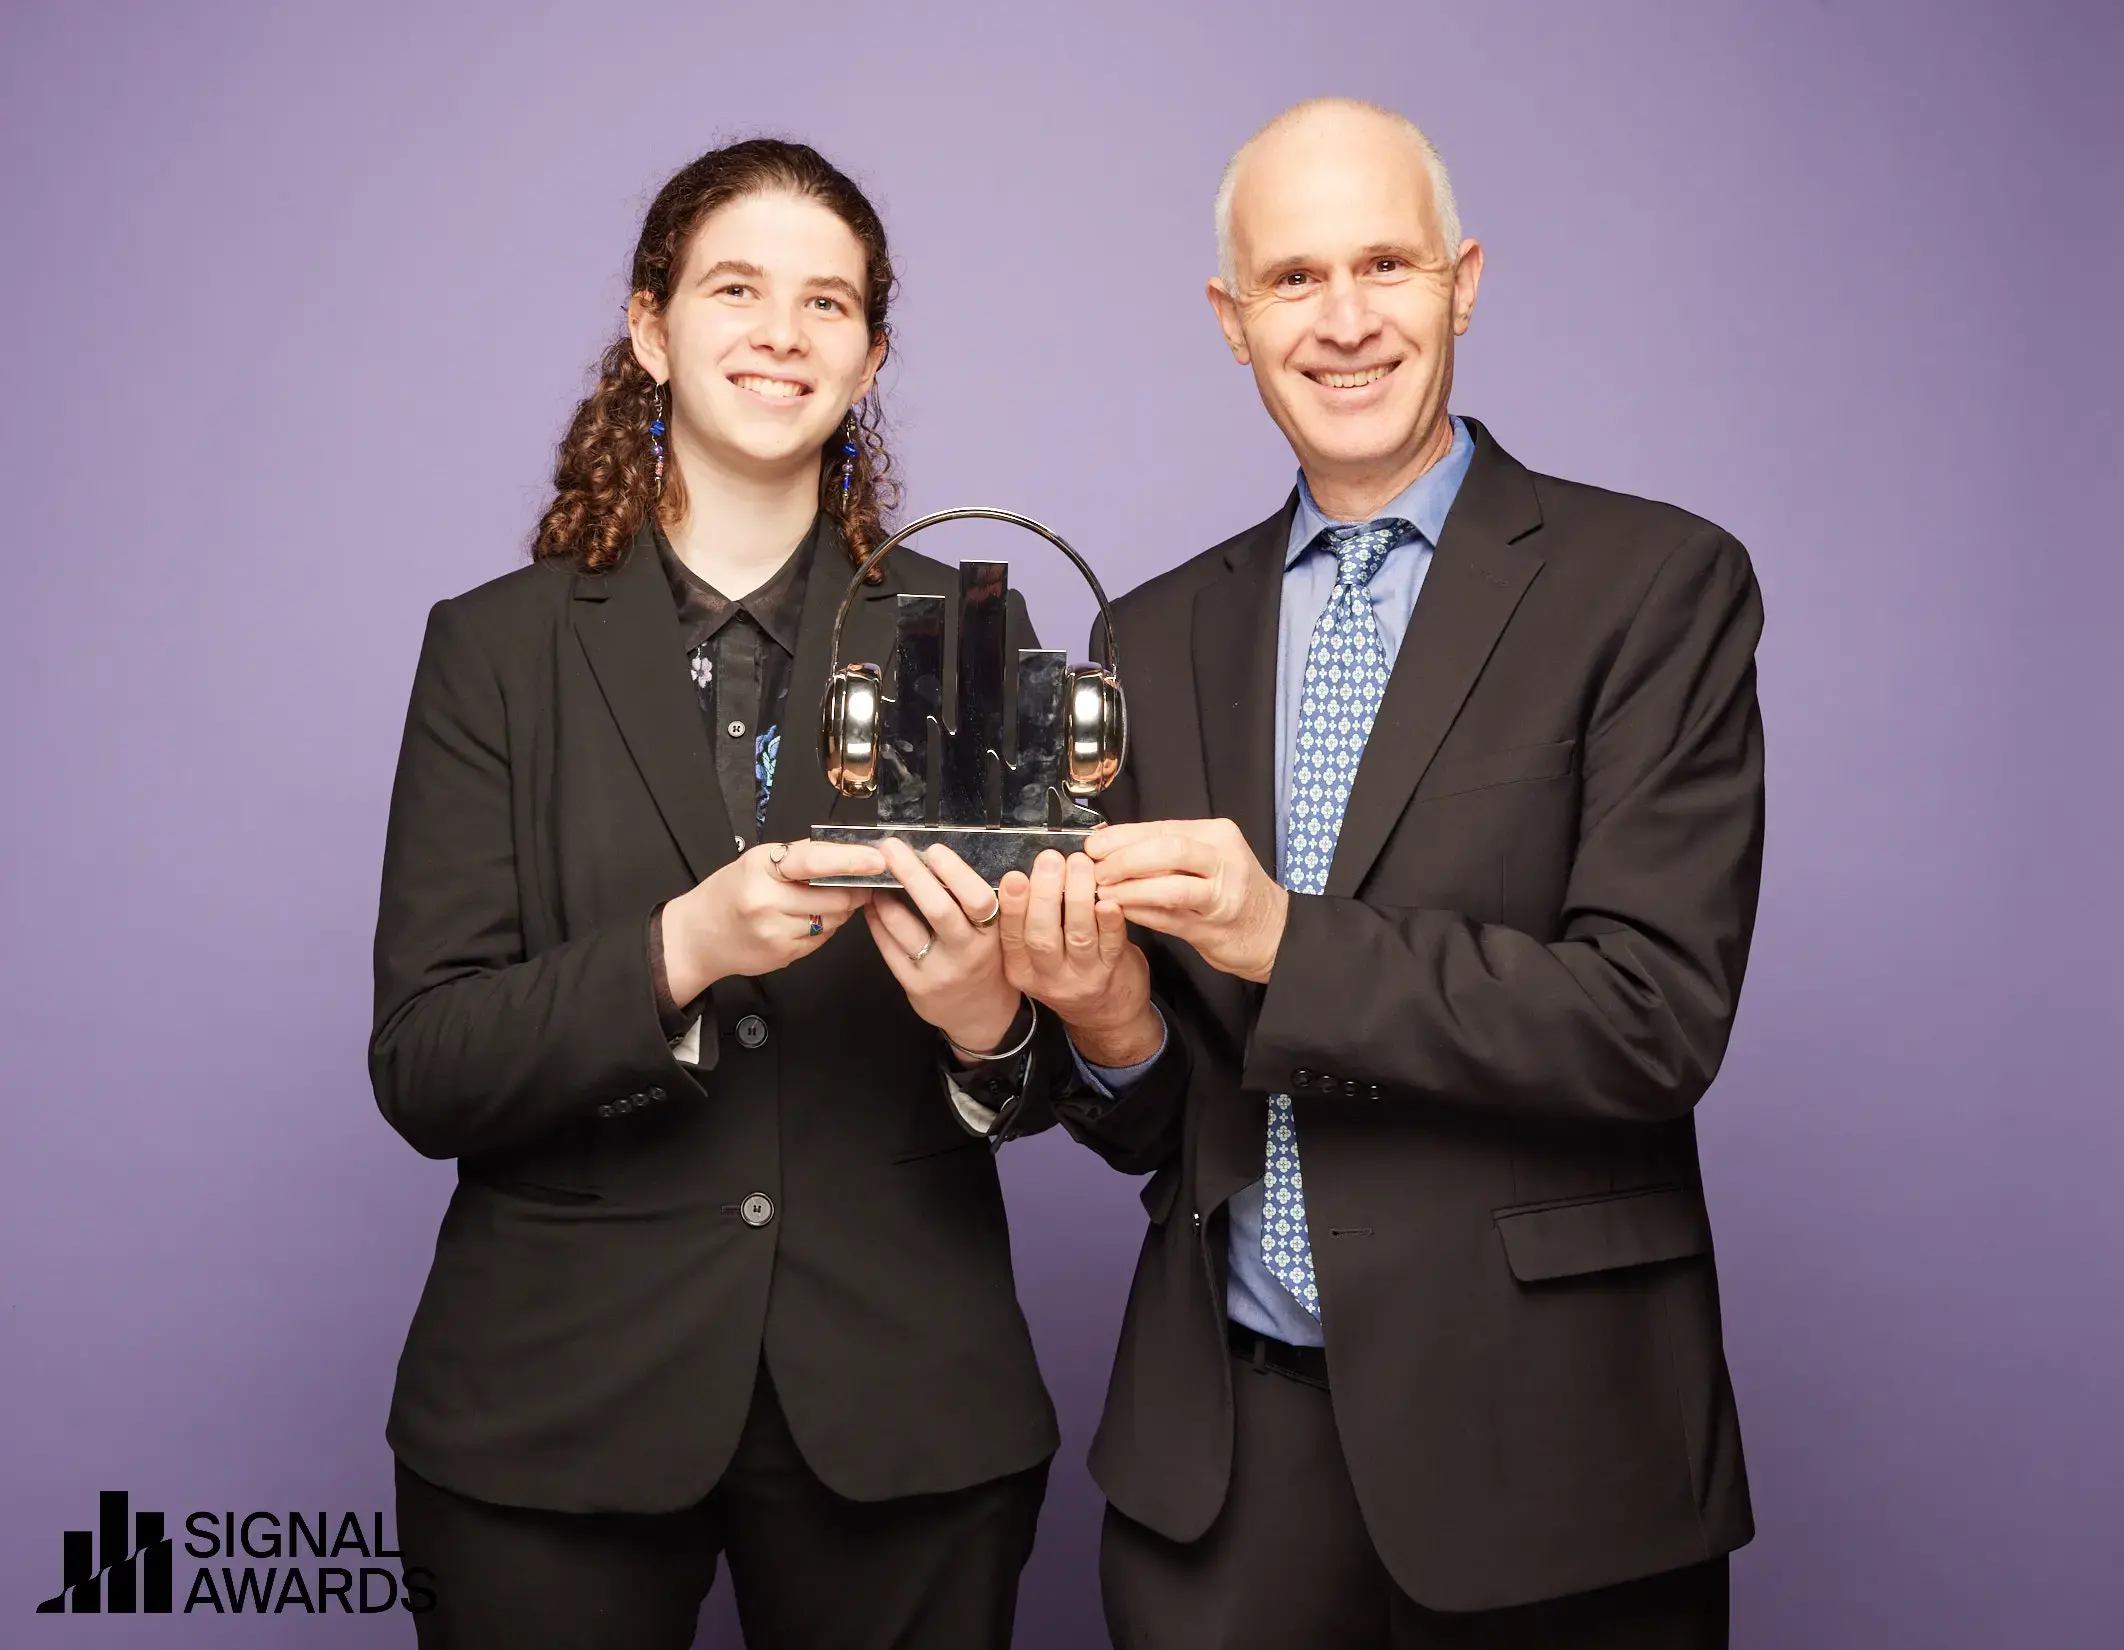 Micah and Sydney Fink accept a Signal Award